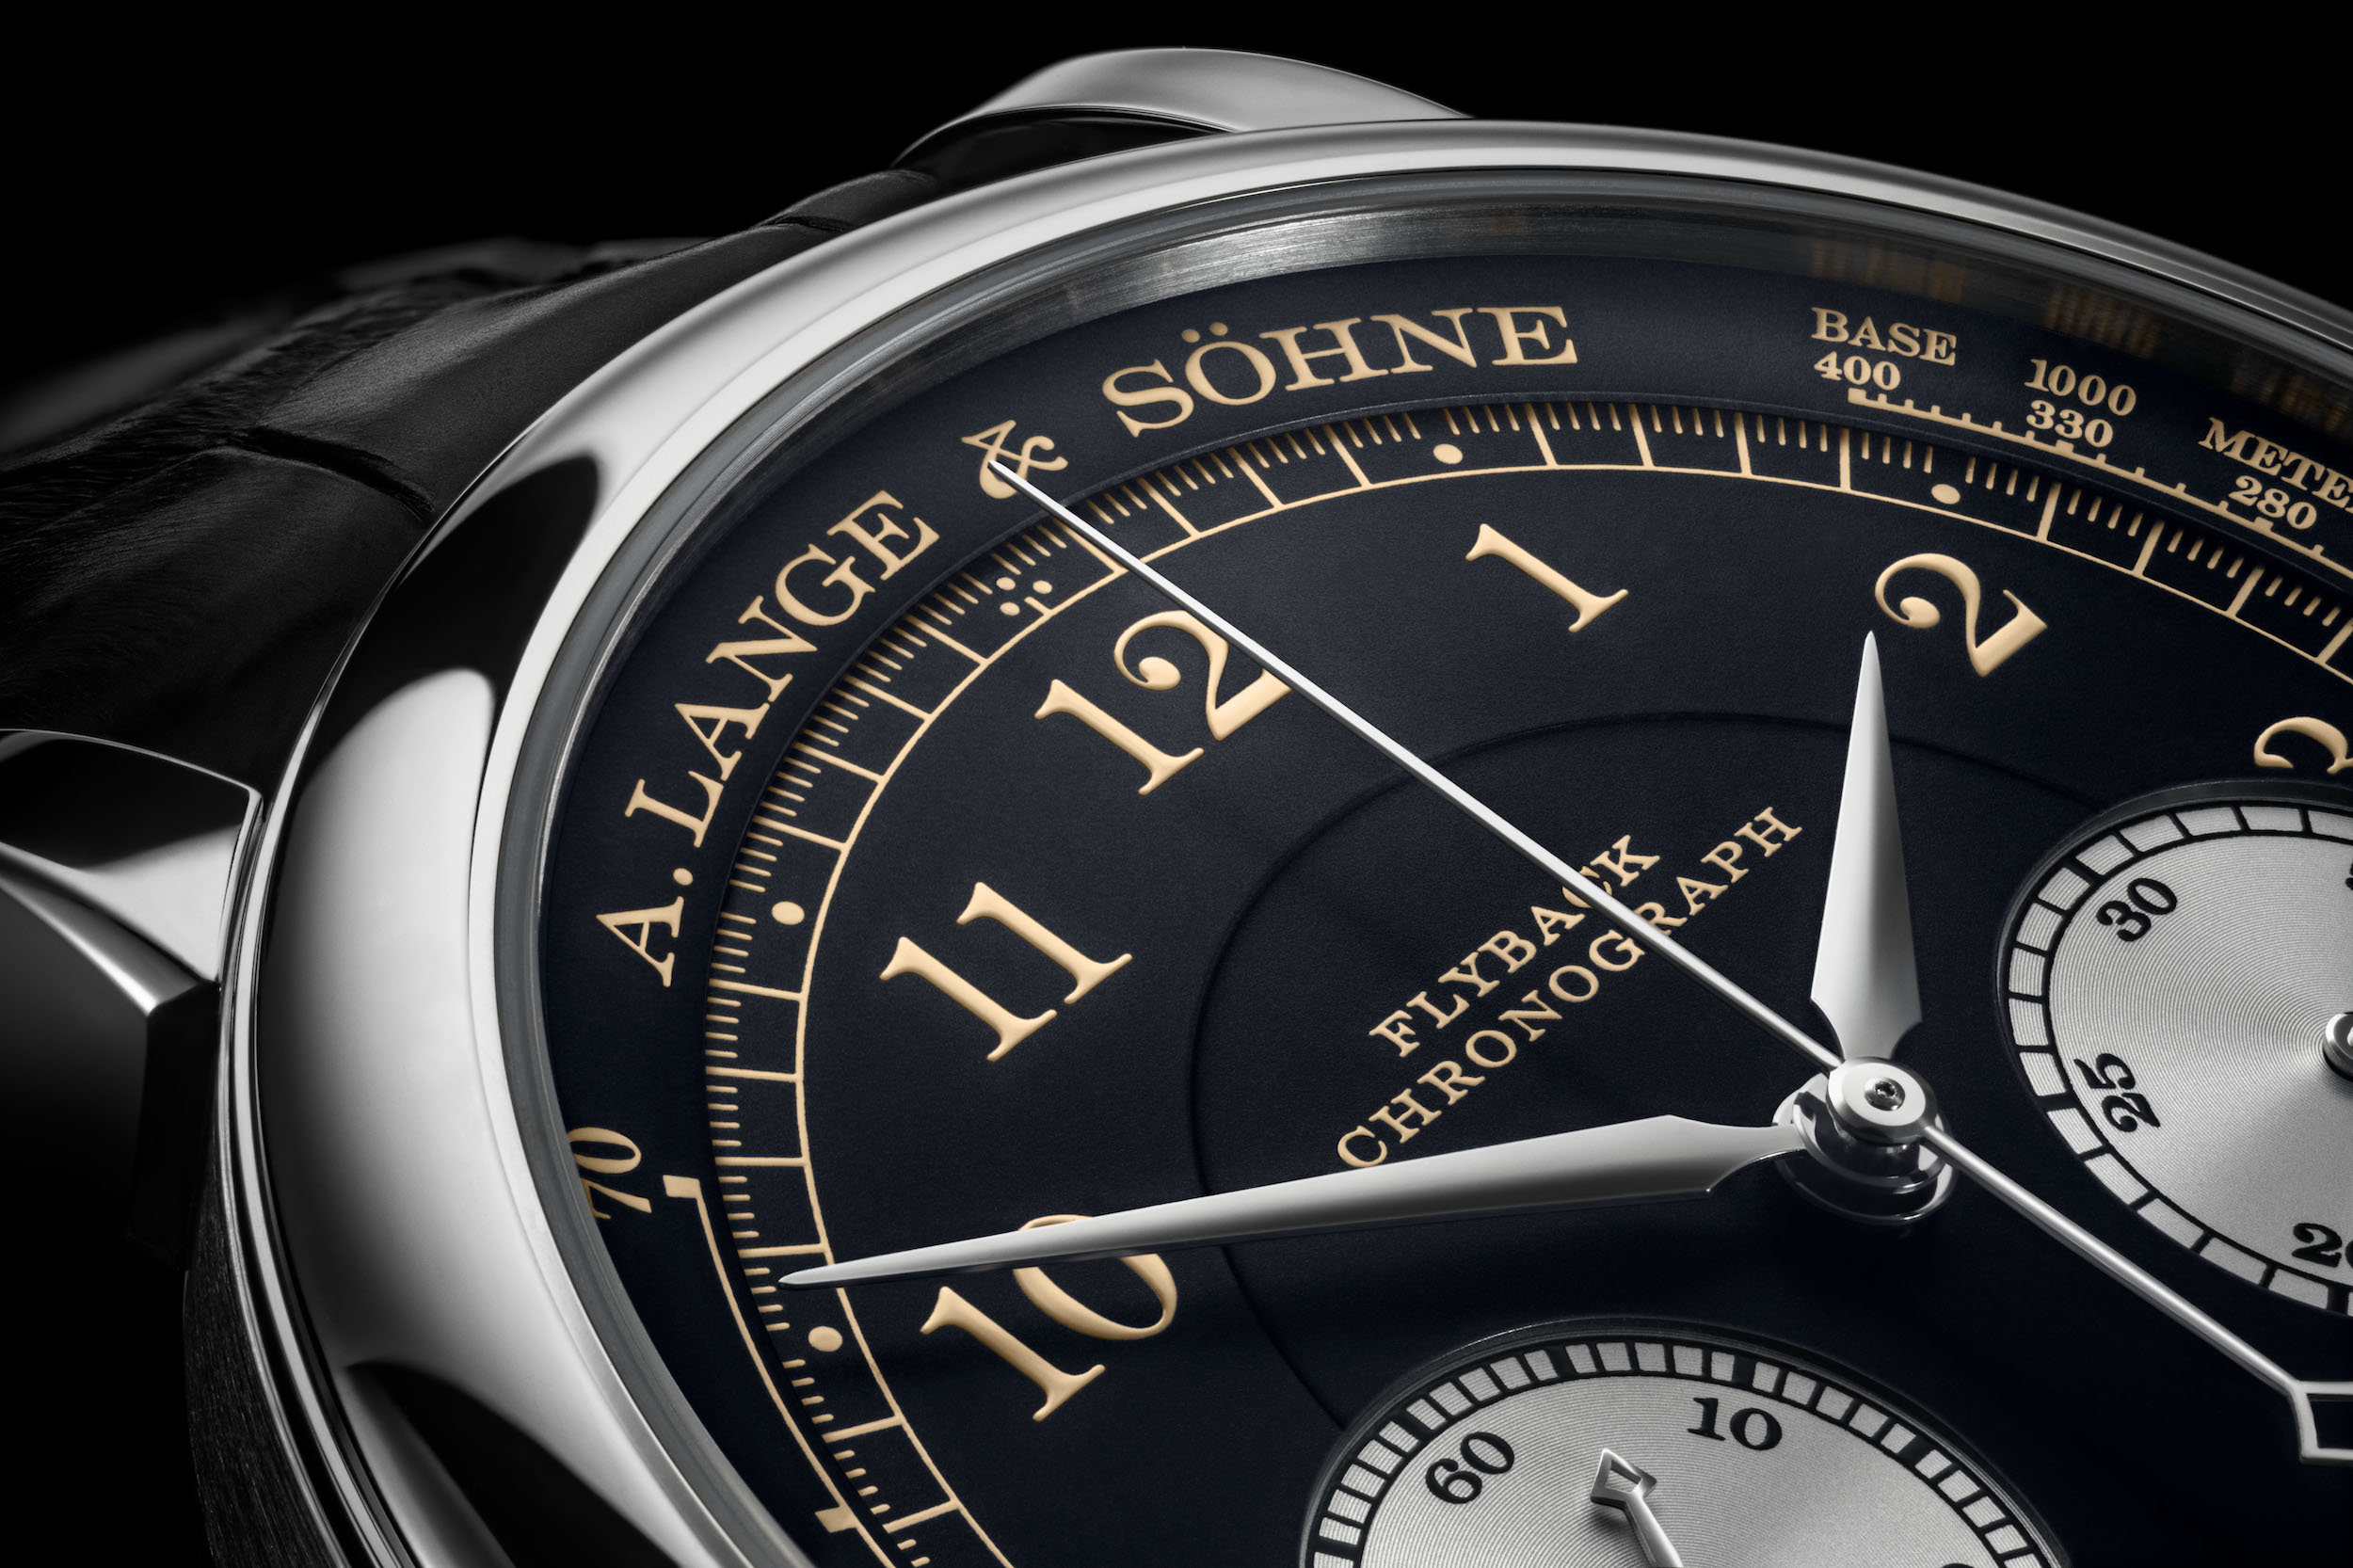 a-lange-söhne hampton court concours of elegance 2022 chronographs unique limited exklusive timepieces watches